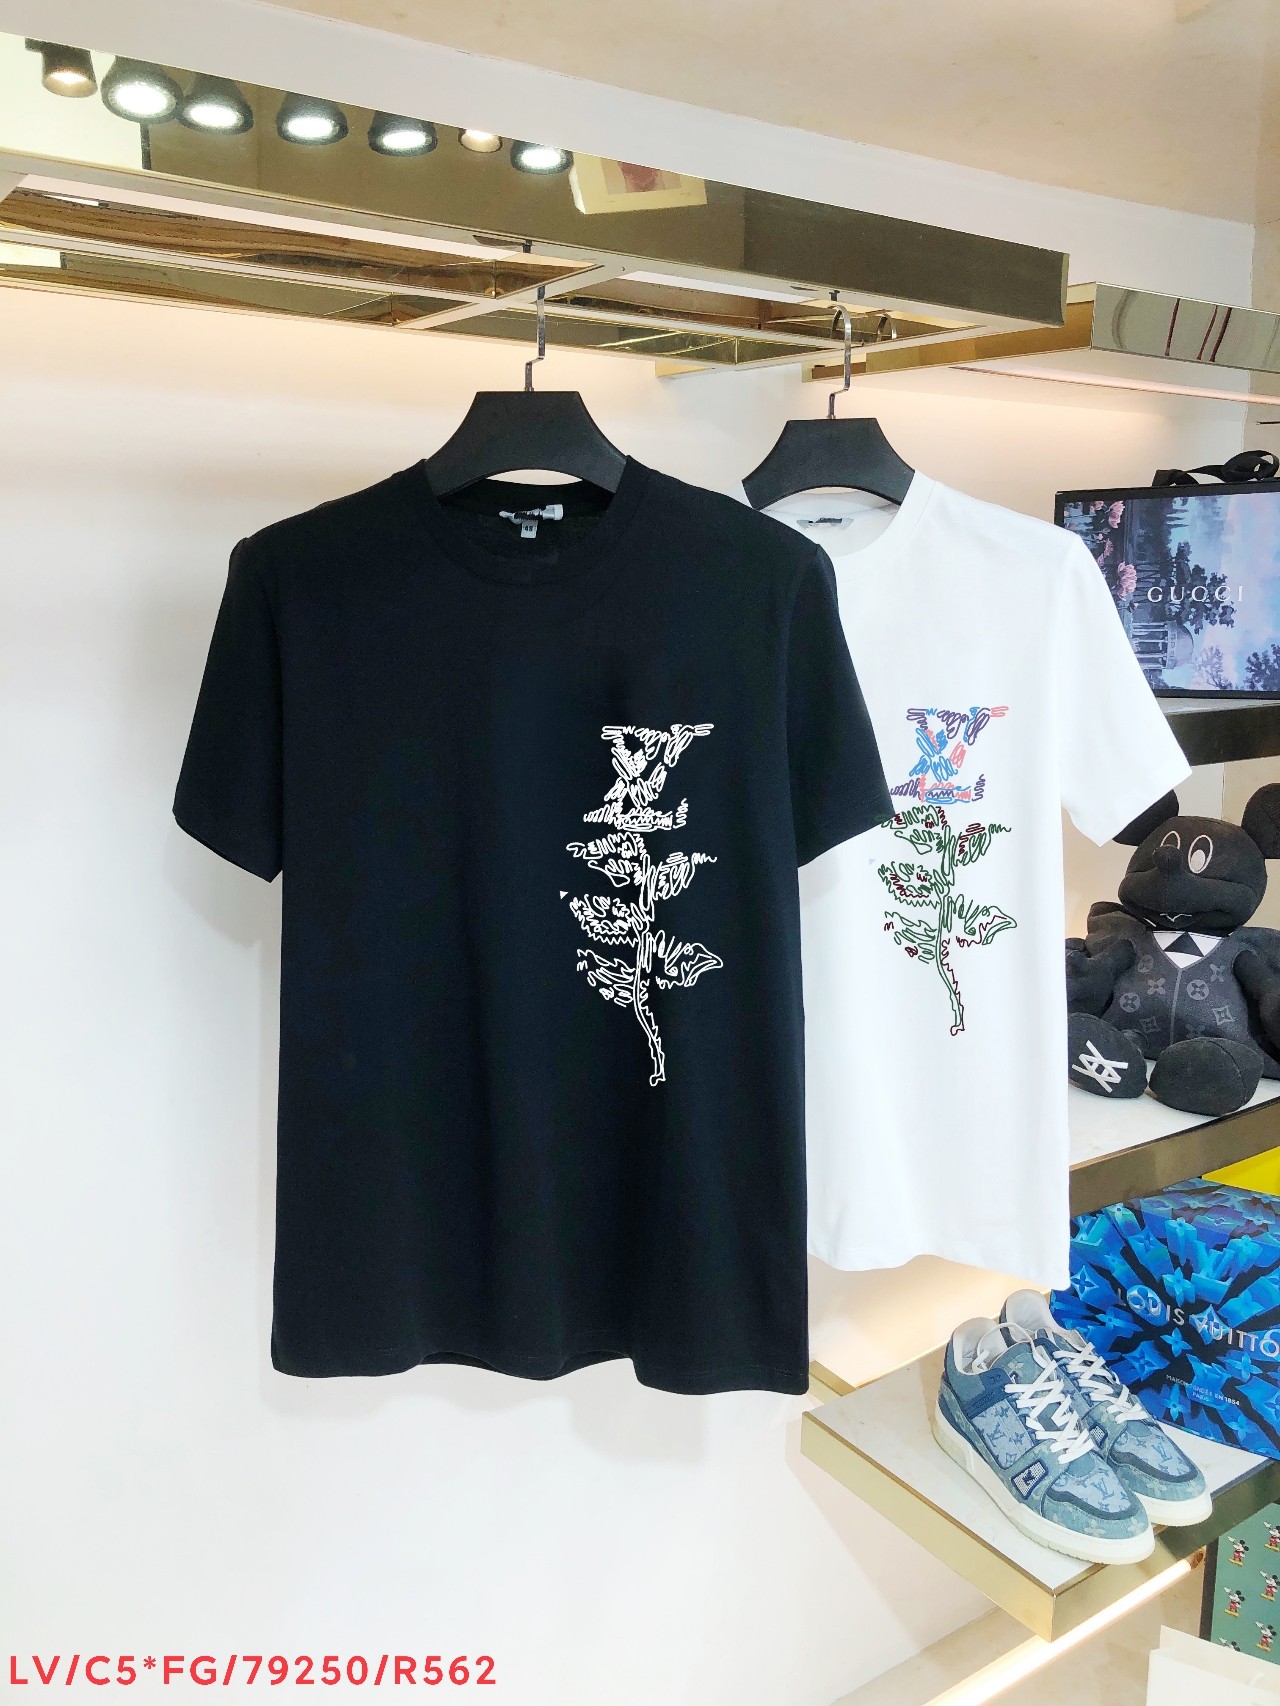 NEW Louis Vuitton Rug • Shirtnation - Shop trending t-shirts